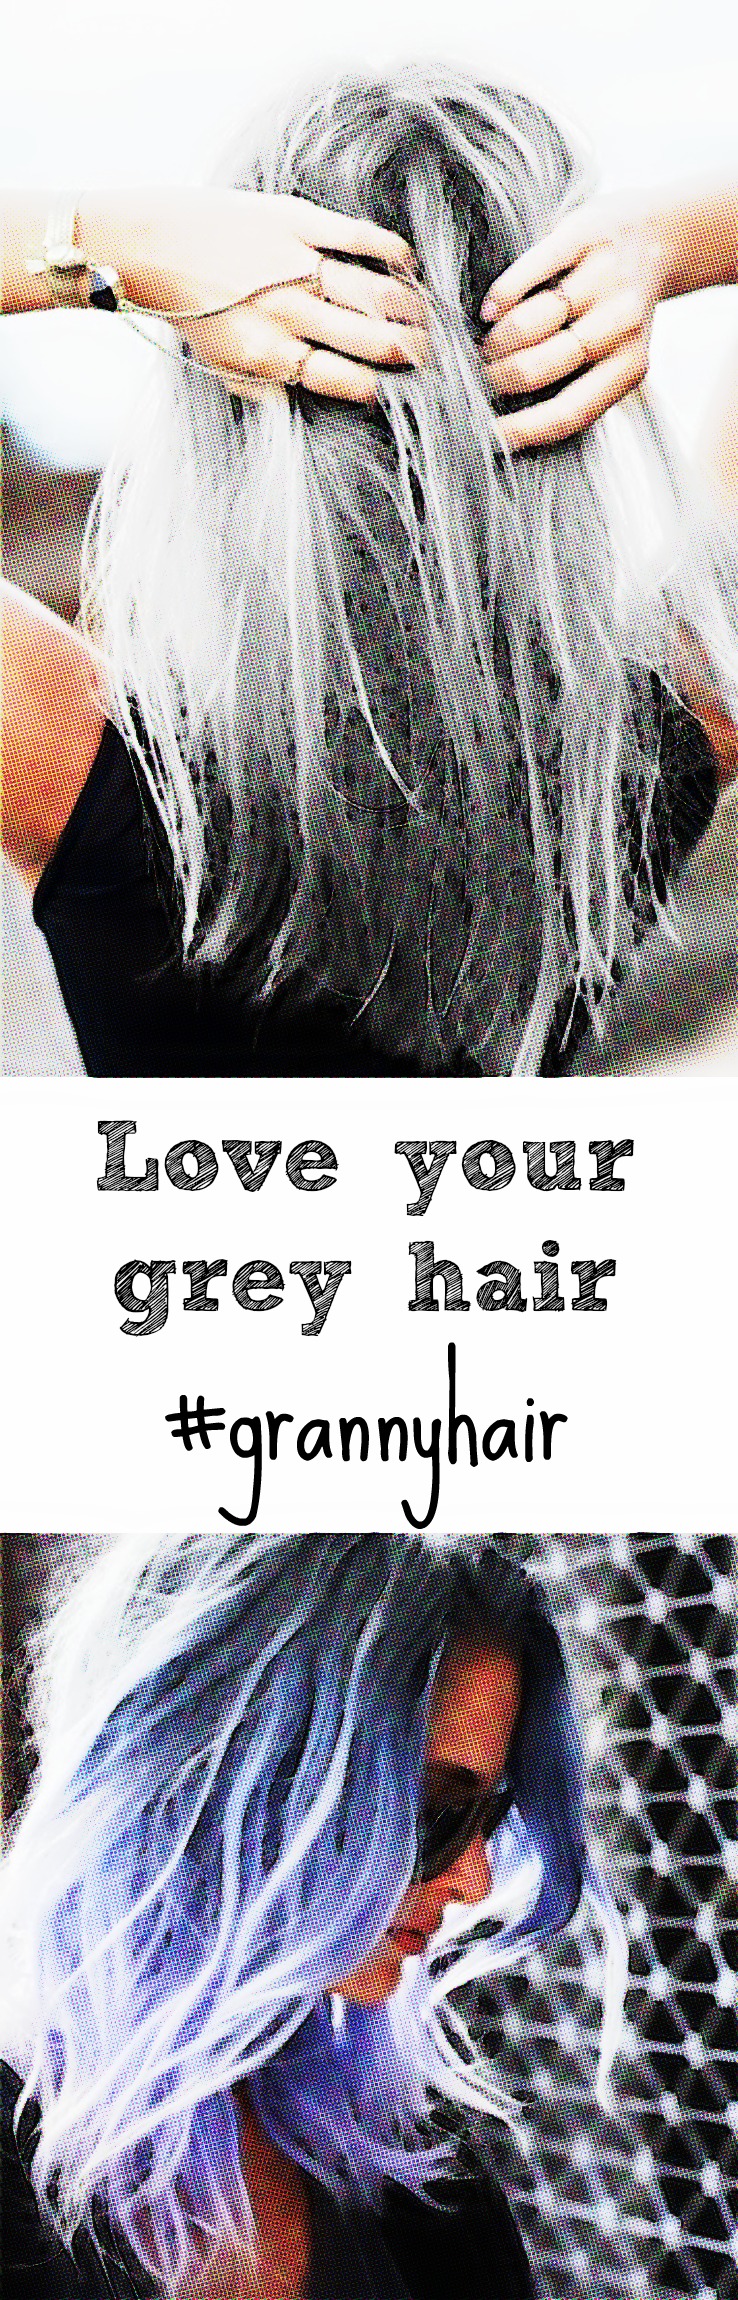 #grannyhair Love Your Grey Hair